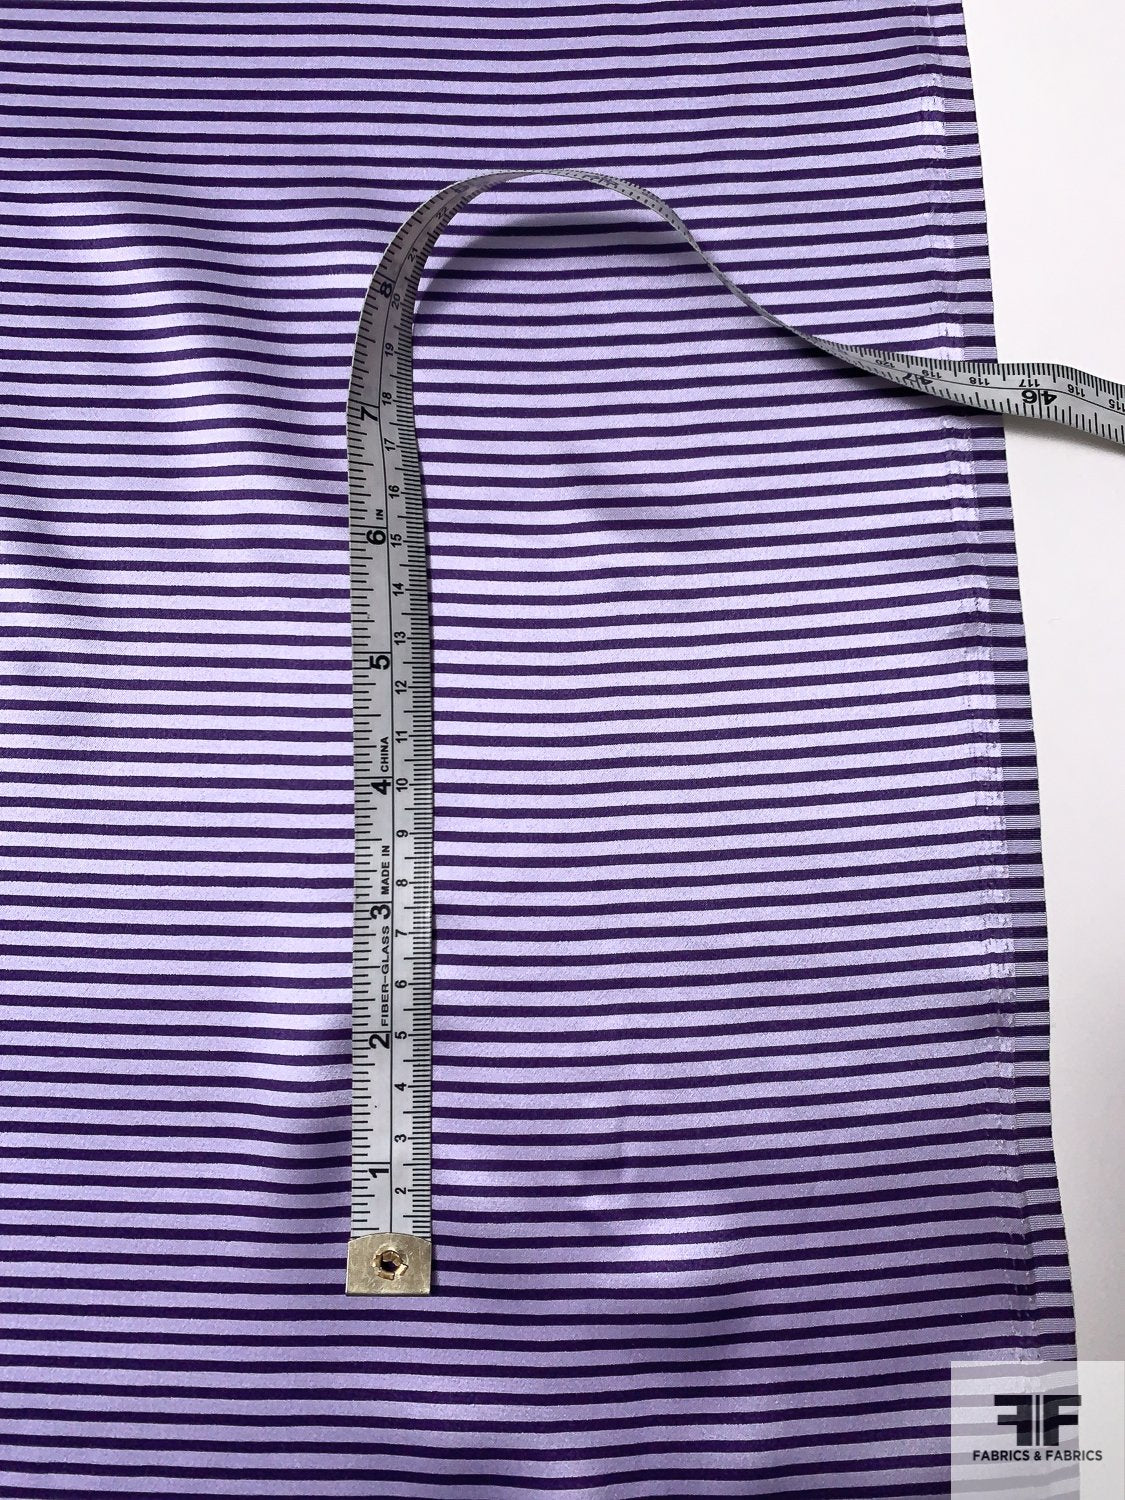 Thin Horizontal Striped Printed Silk Charmeuse - Grape Purple / Lavender